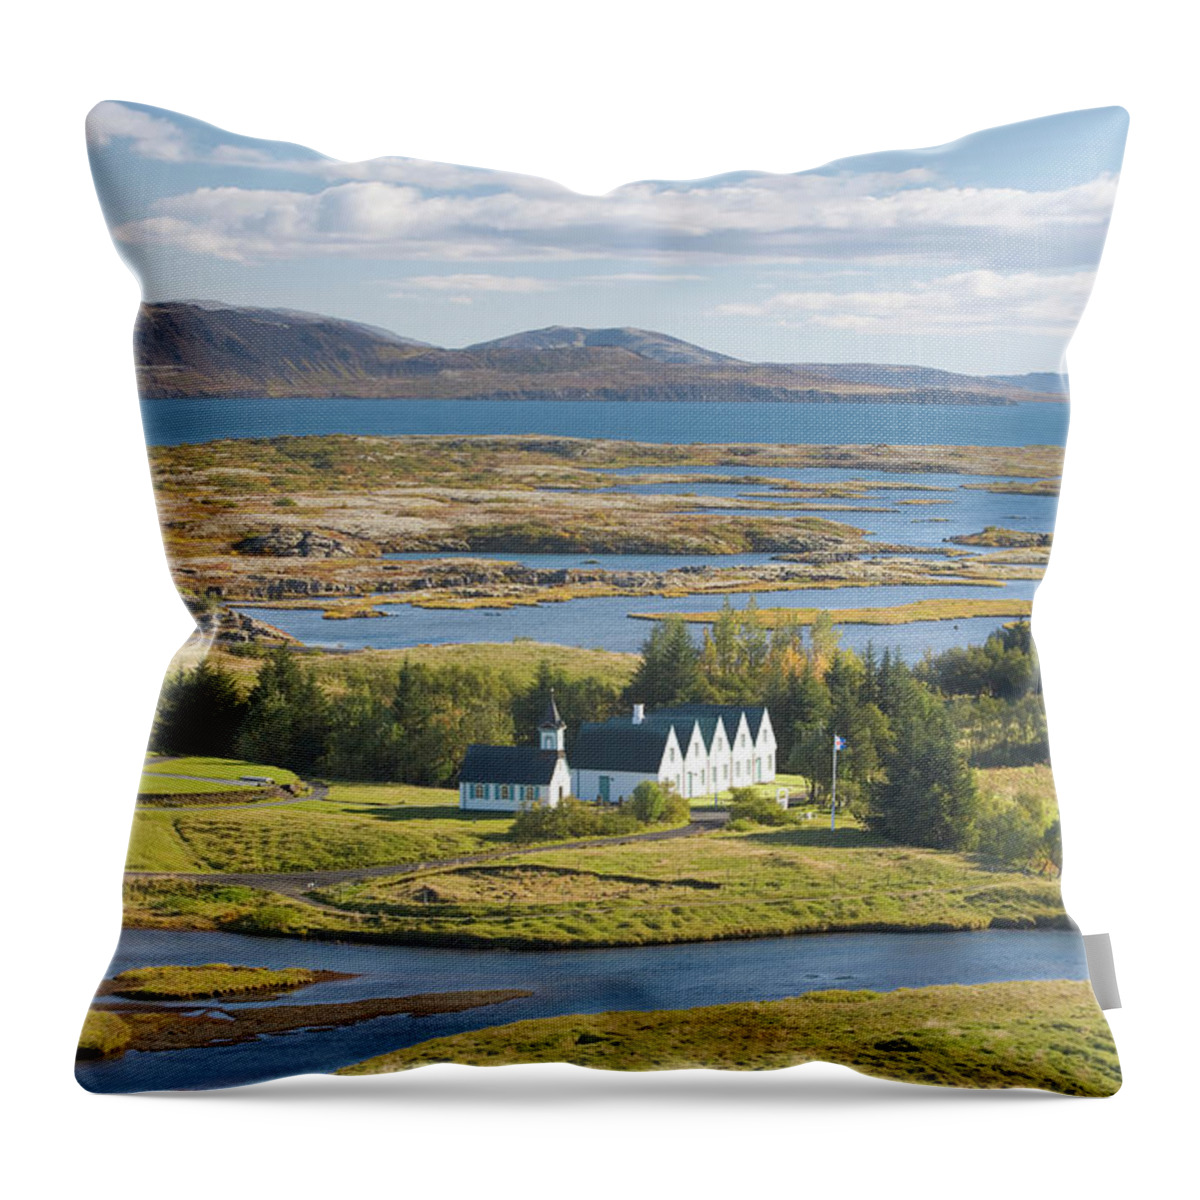 Outdoors Throw Pillow featuring the photograph Iceland, Reykjavik, Pingvellir by Peter Adams